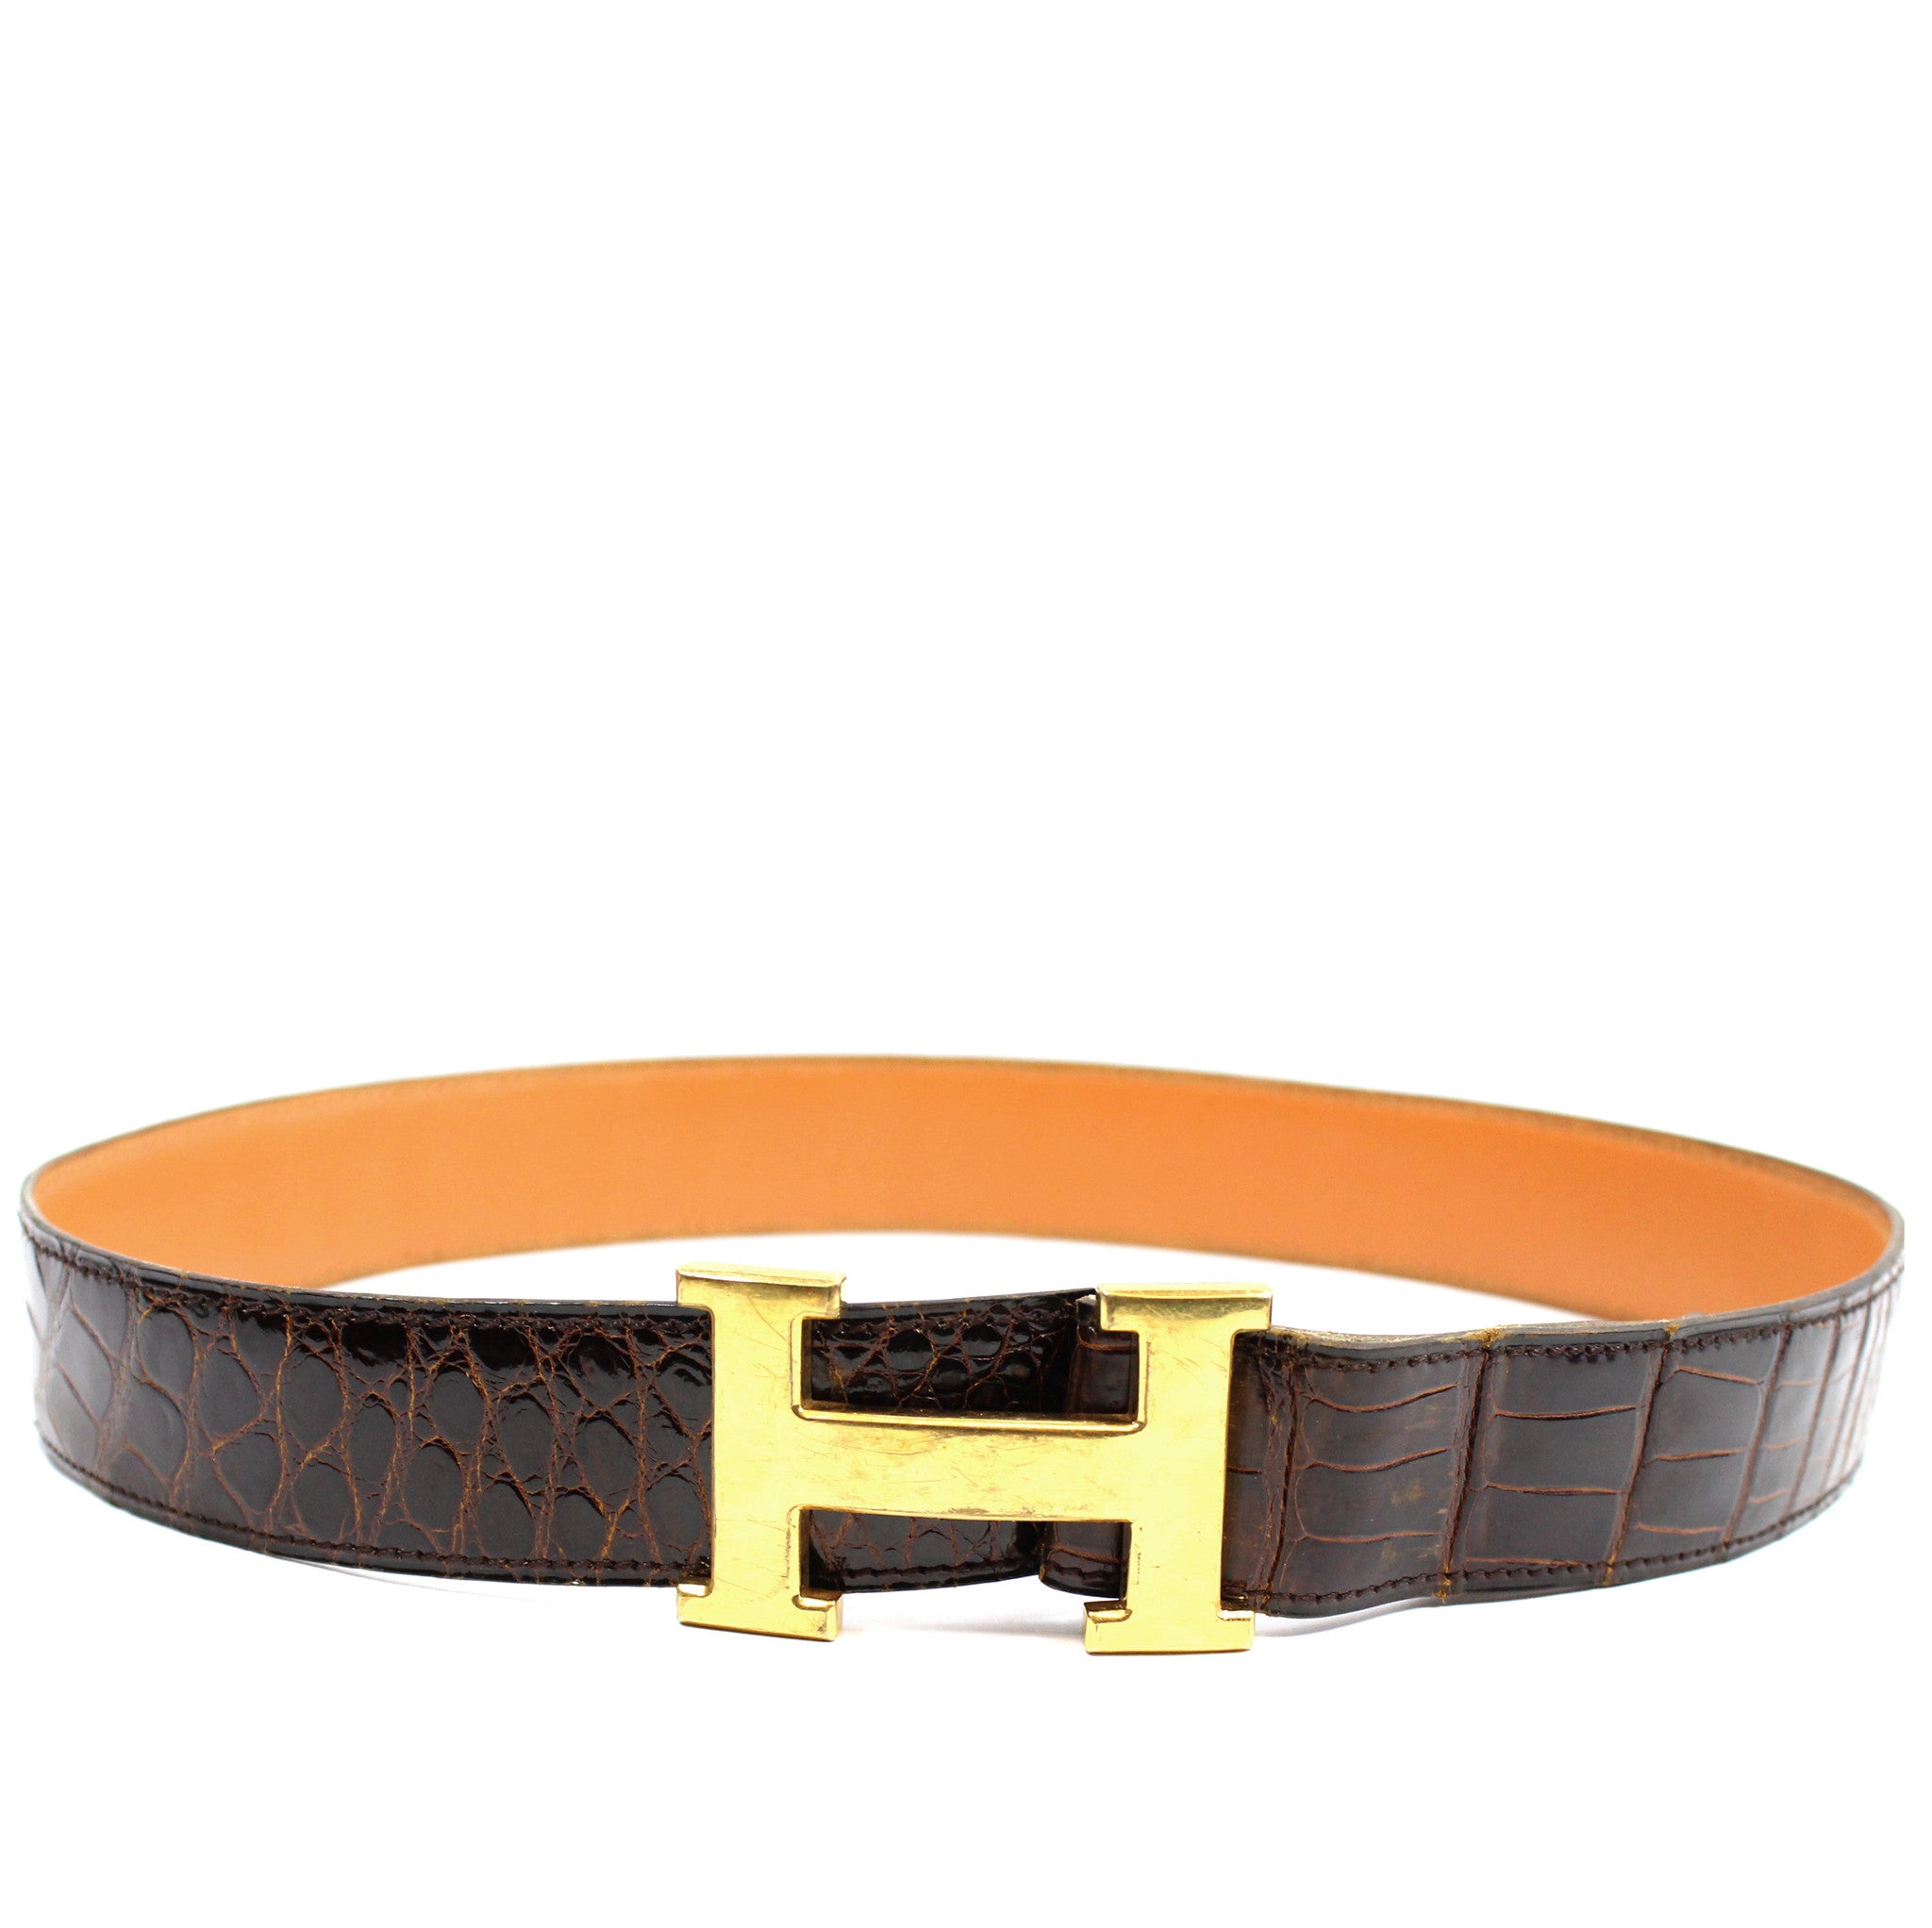 vintage hermes belt buckle